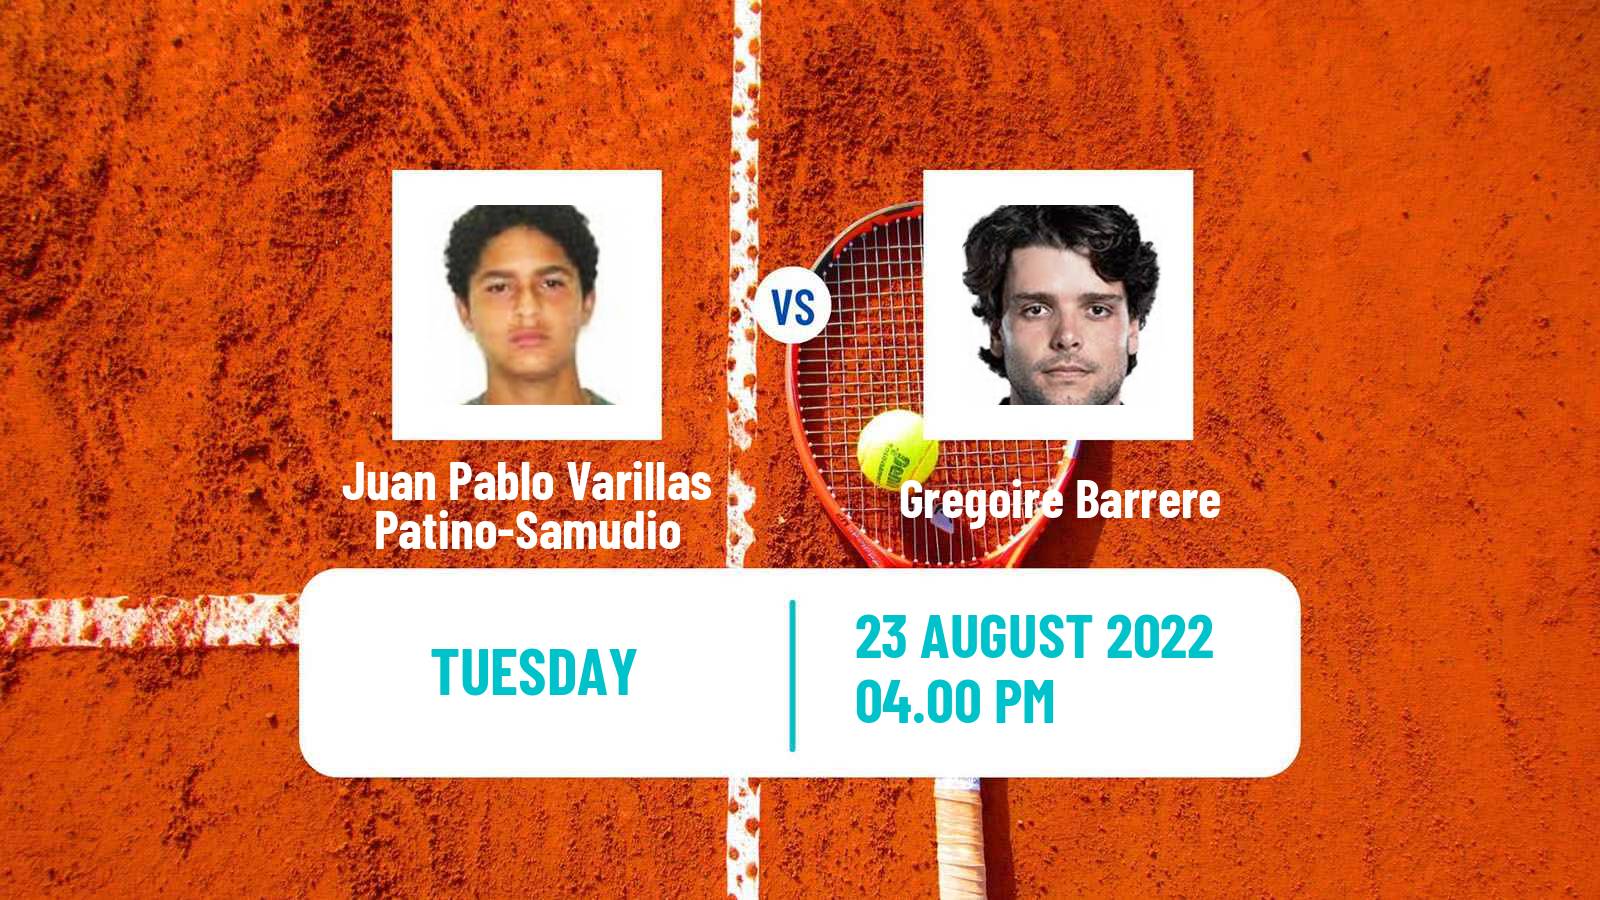 Tennis ATP US Open Juan Pablo Varillas Patino-Samudio - Gregoire Barrere